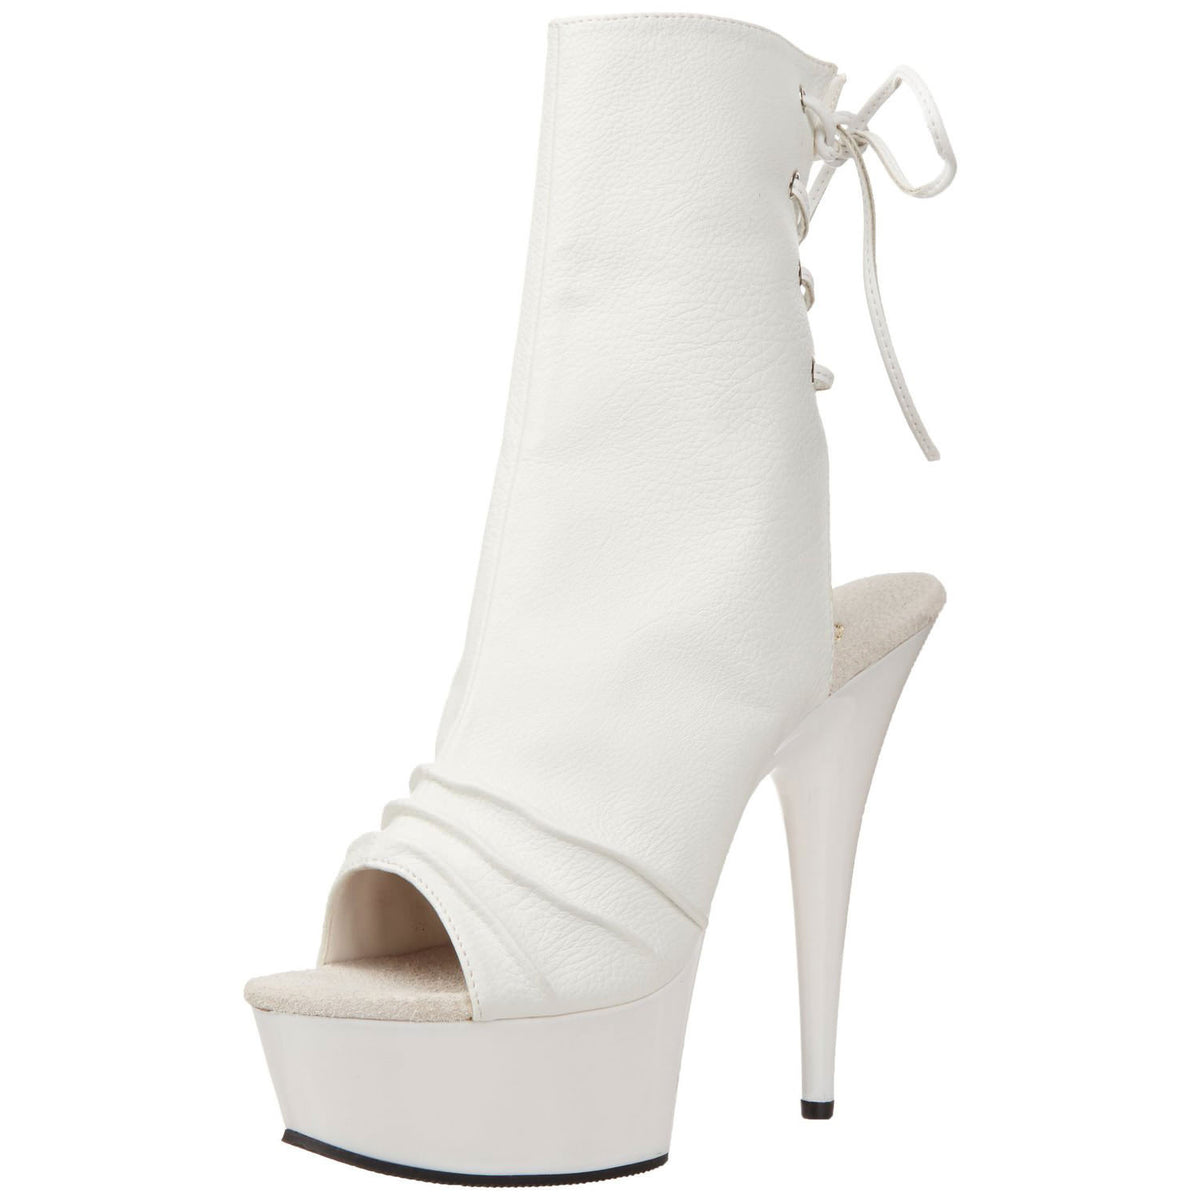 PLEASER DELIGHT-1018 White Pu Ankle Boots - Shoecup.com - 1